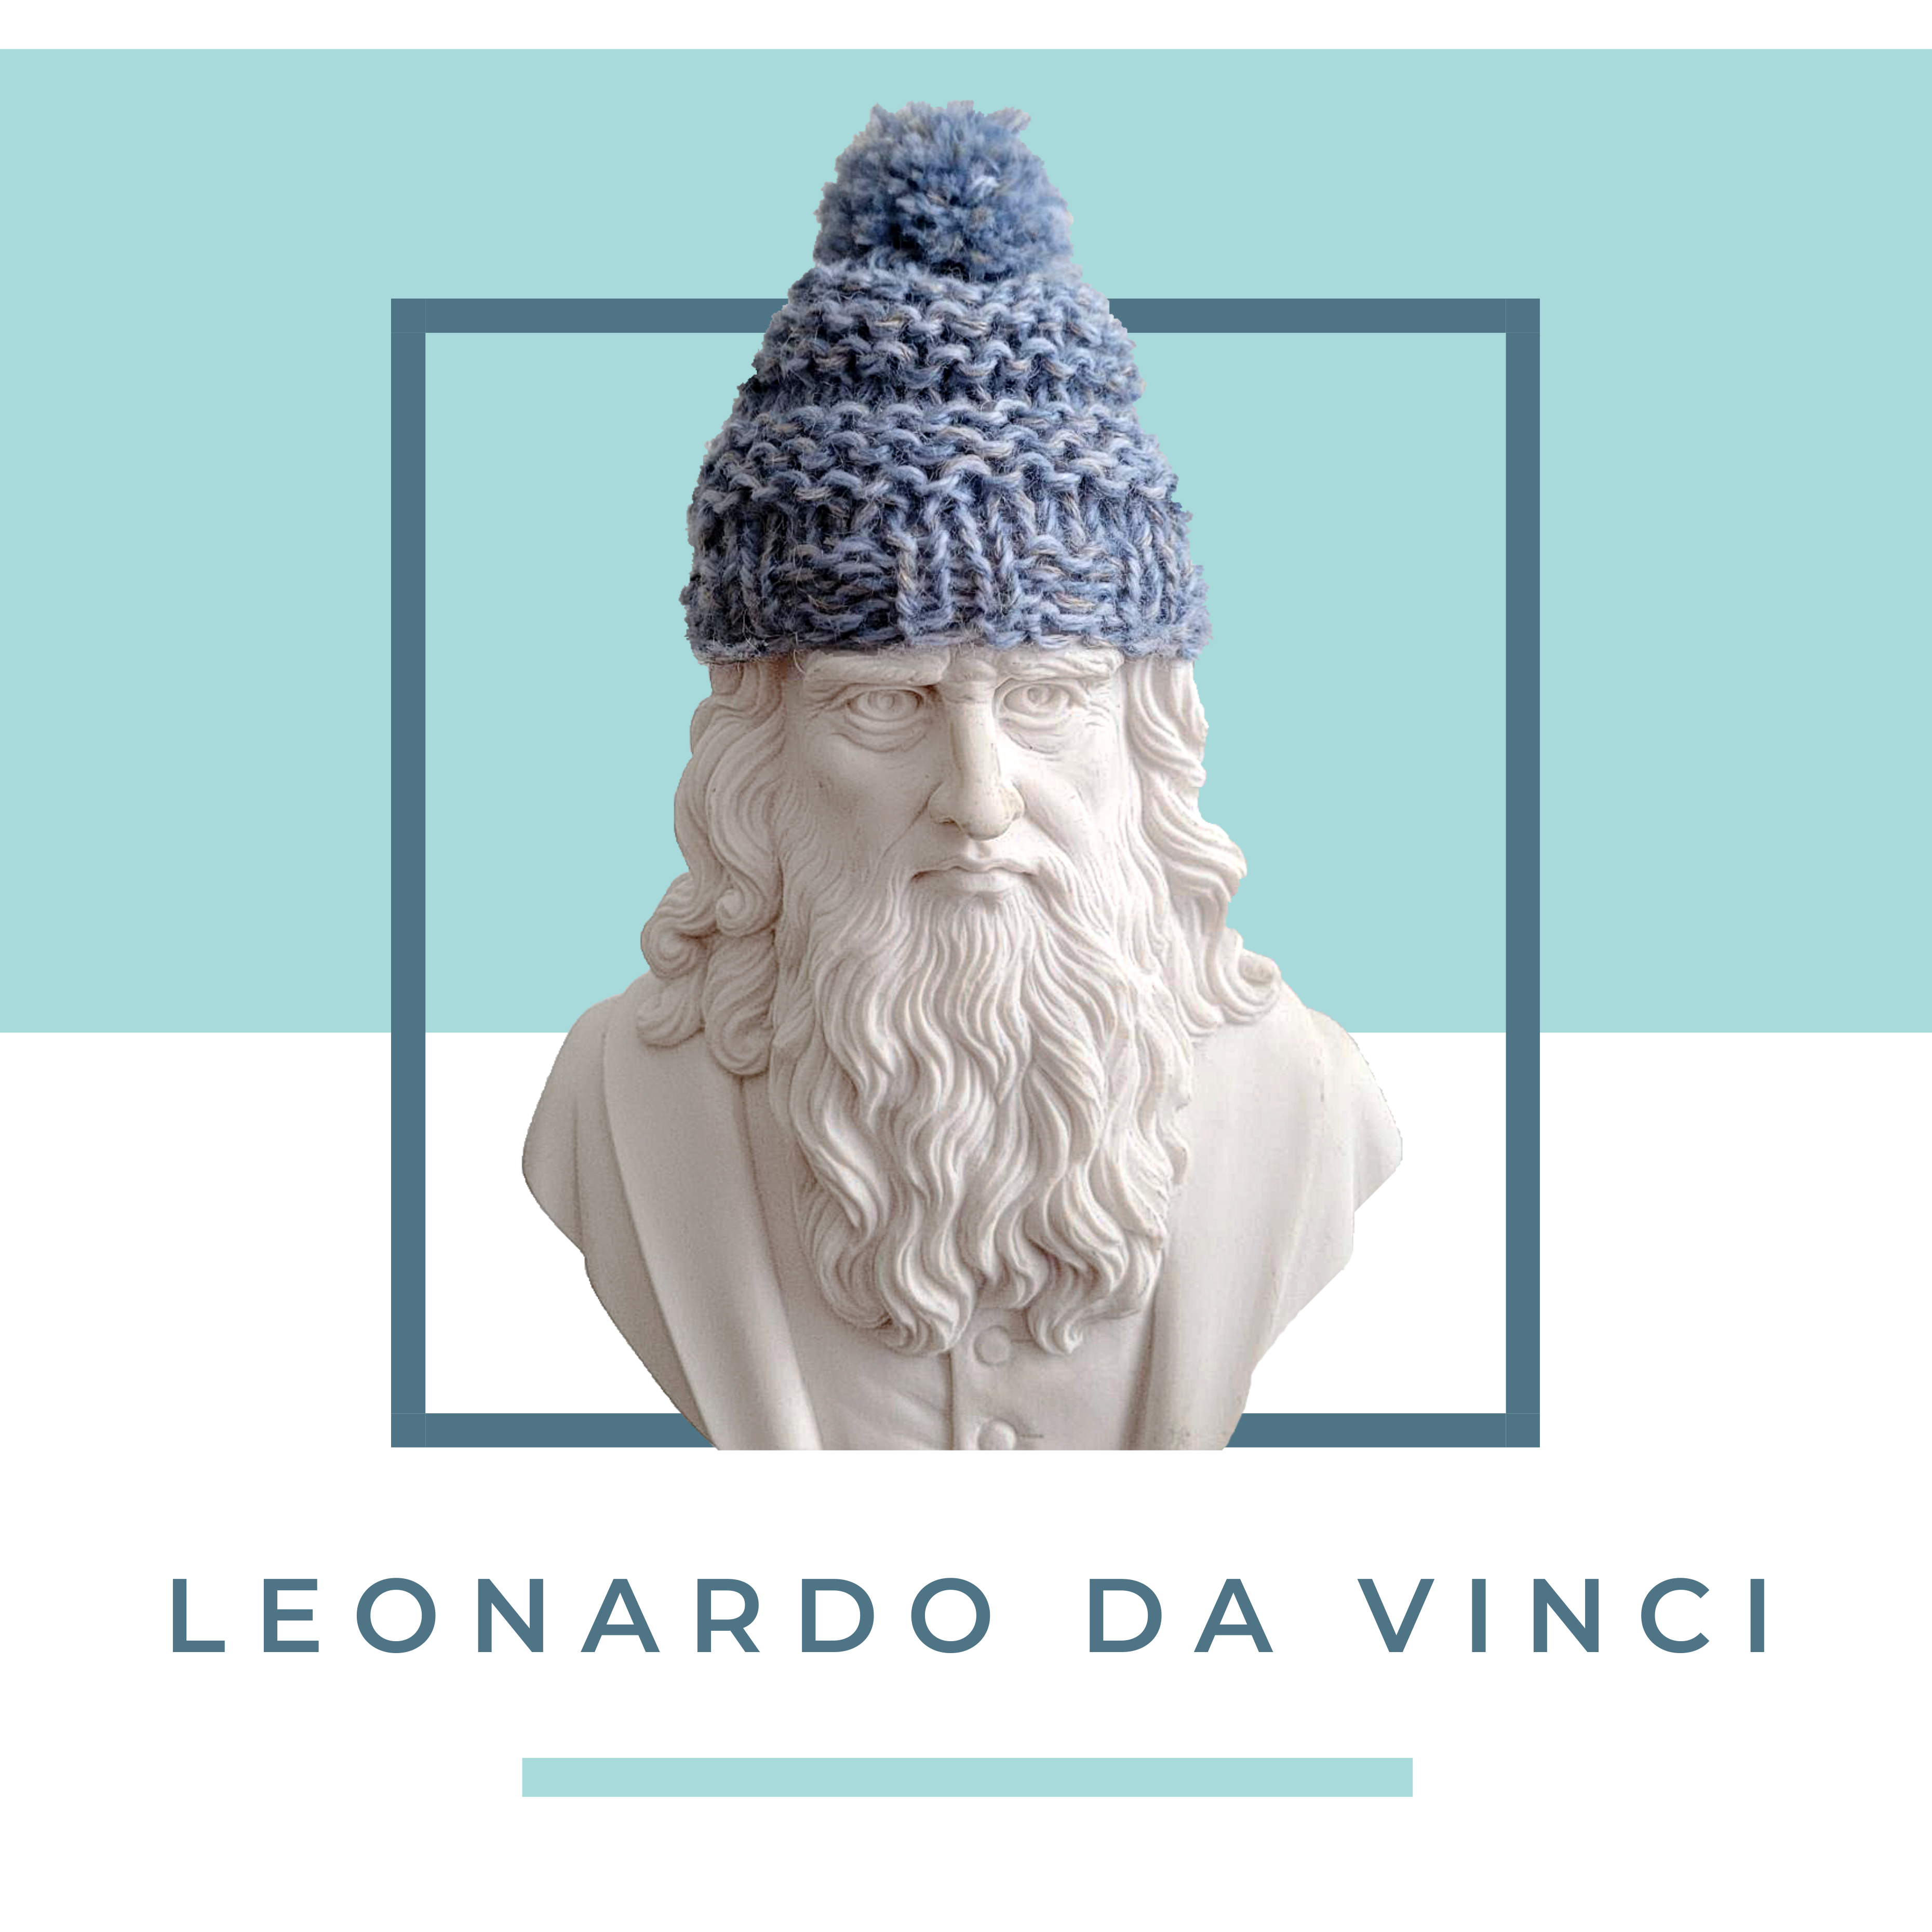 Leonardo da Vinci (with a hat)